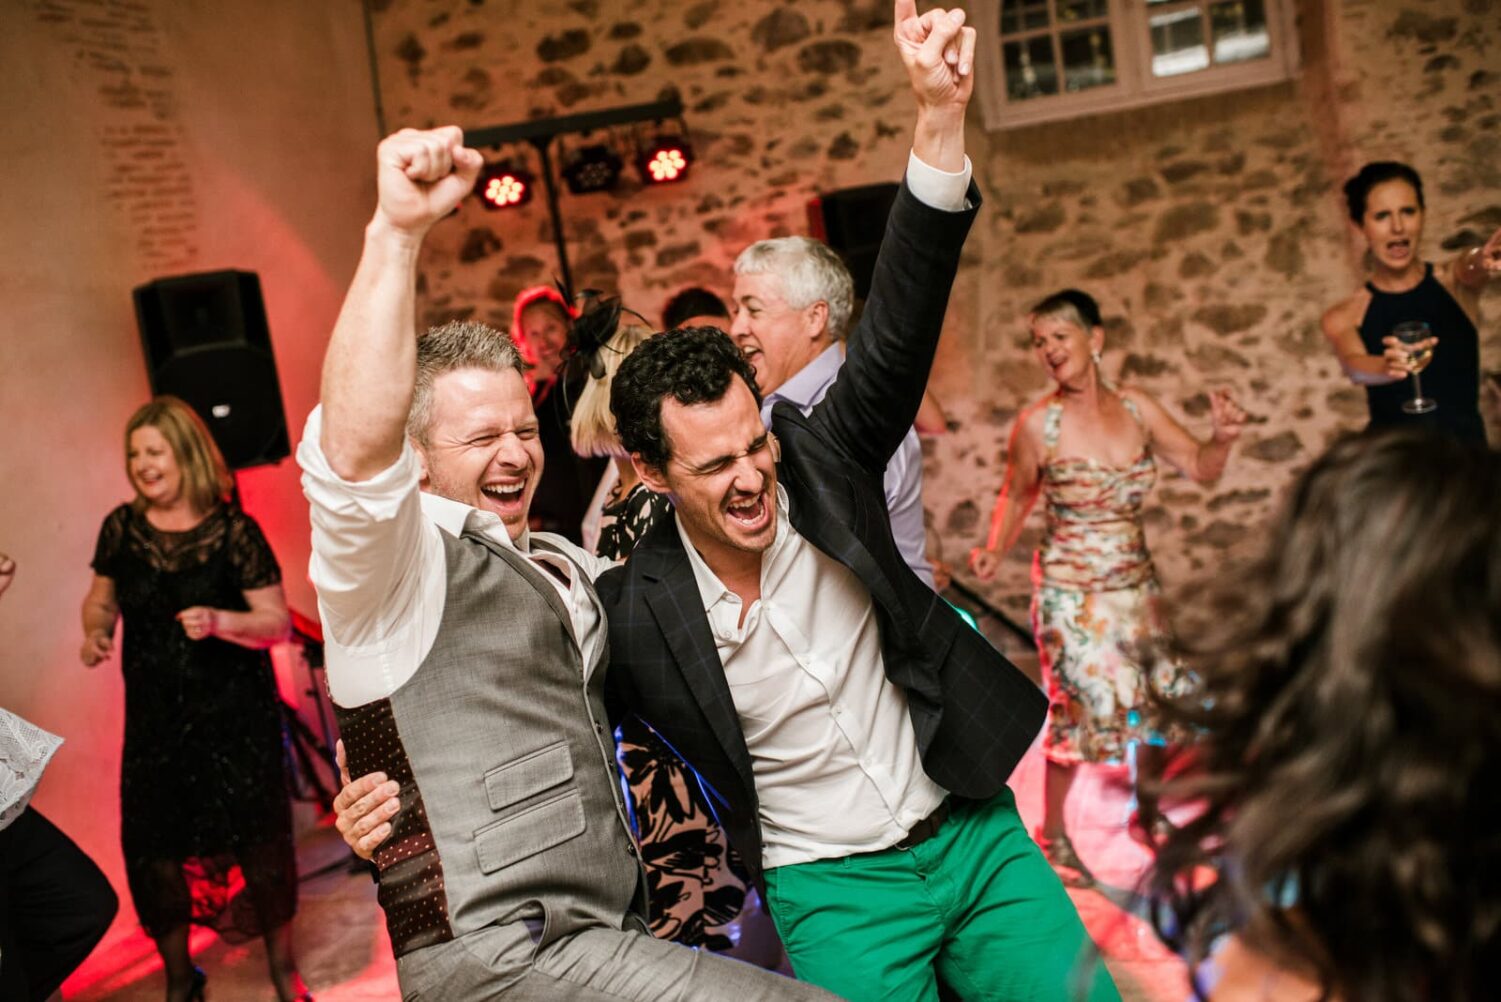 guests on dance-floor at wedding